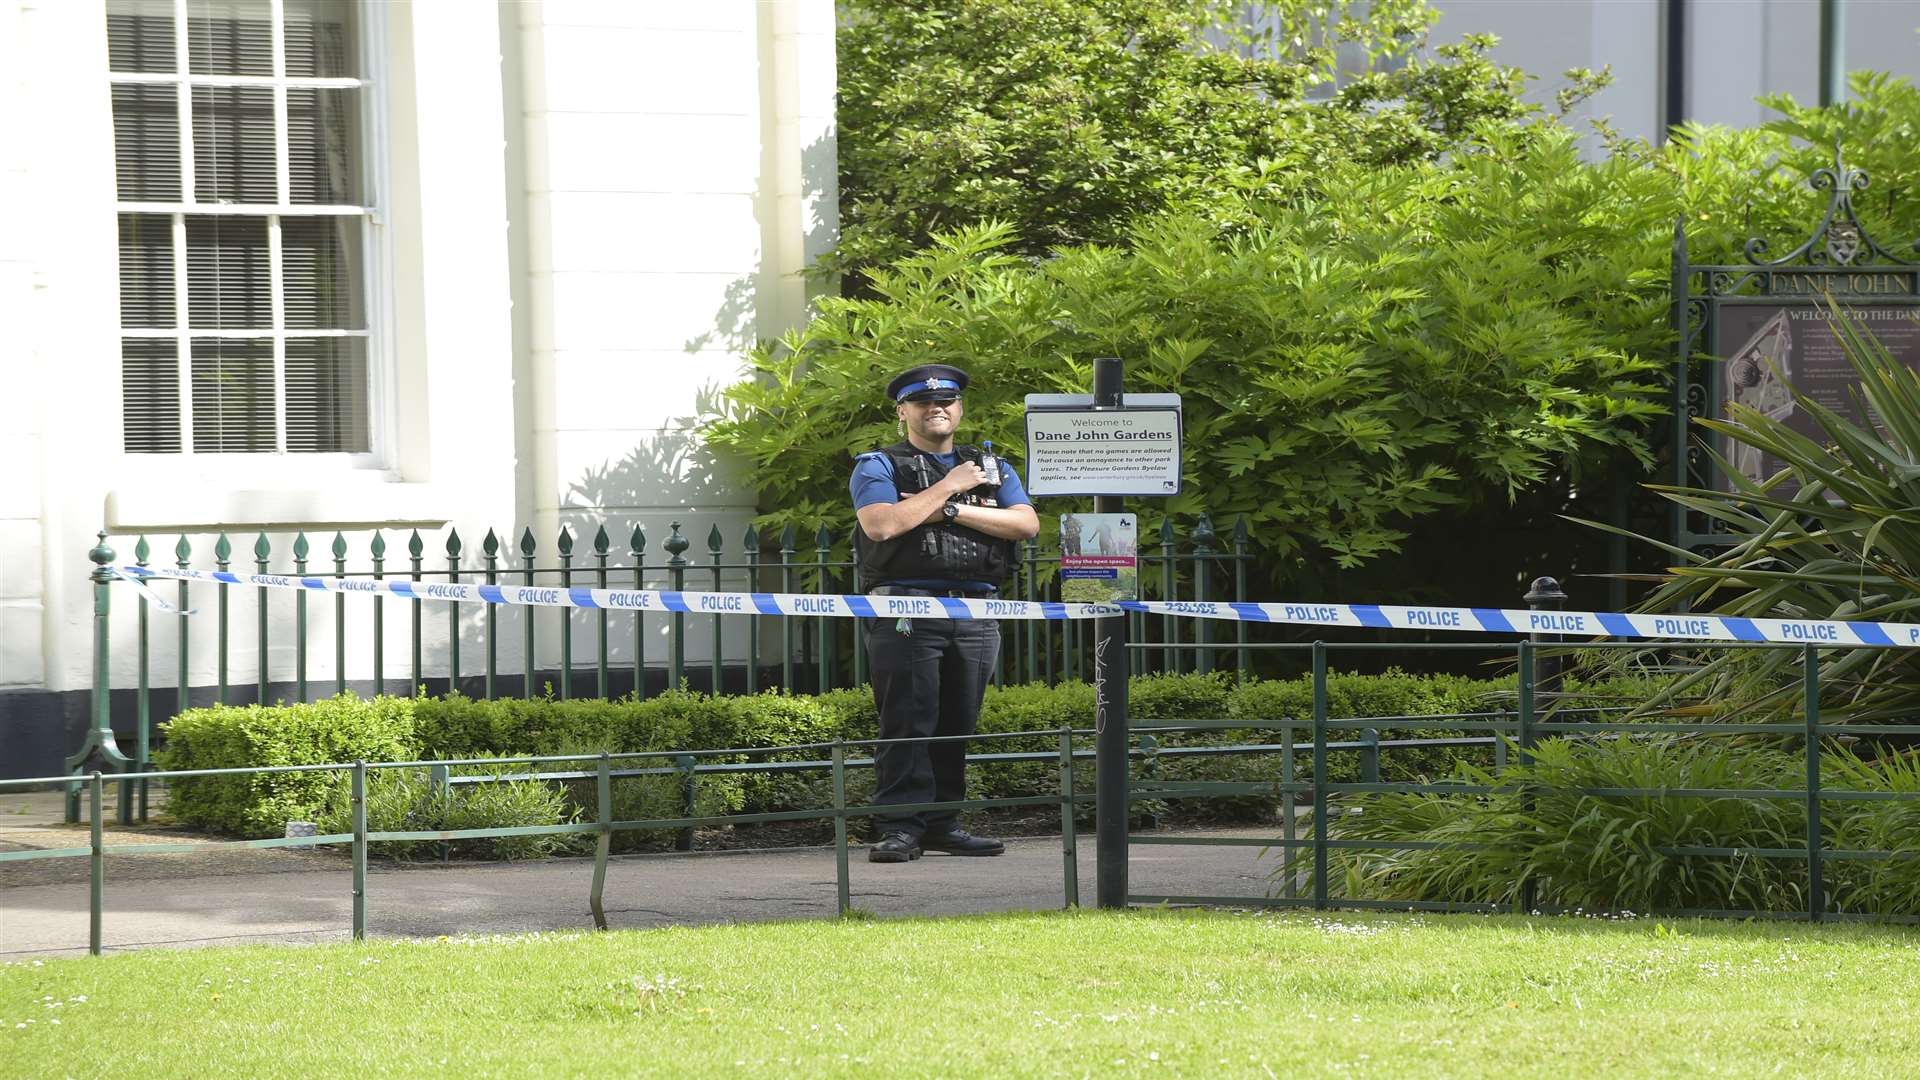 The alleged attack happened in Dane John Gardens